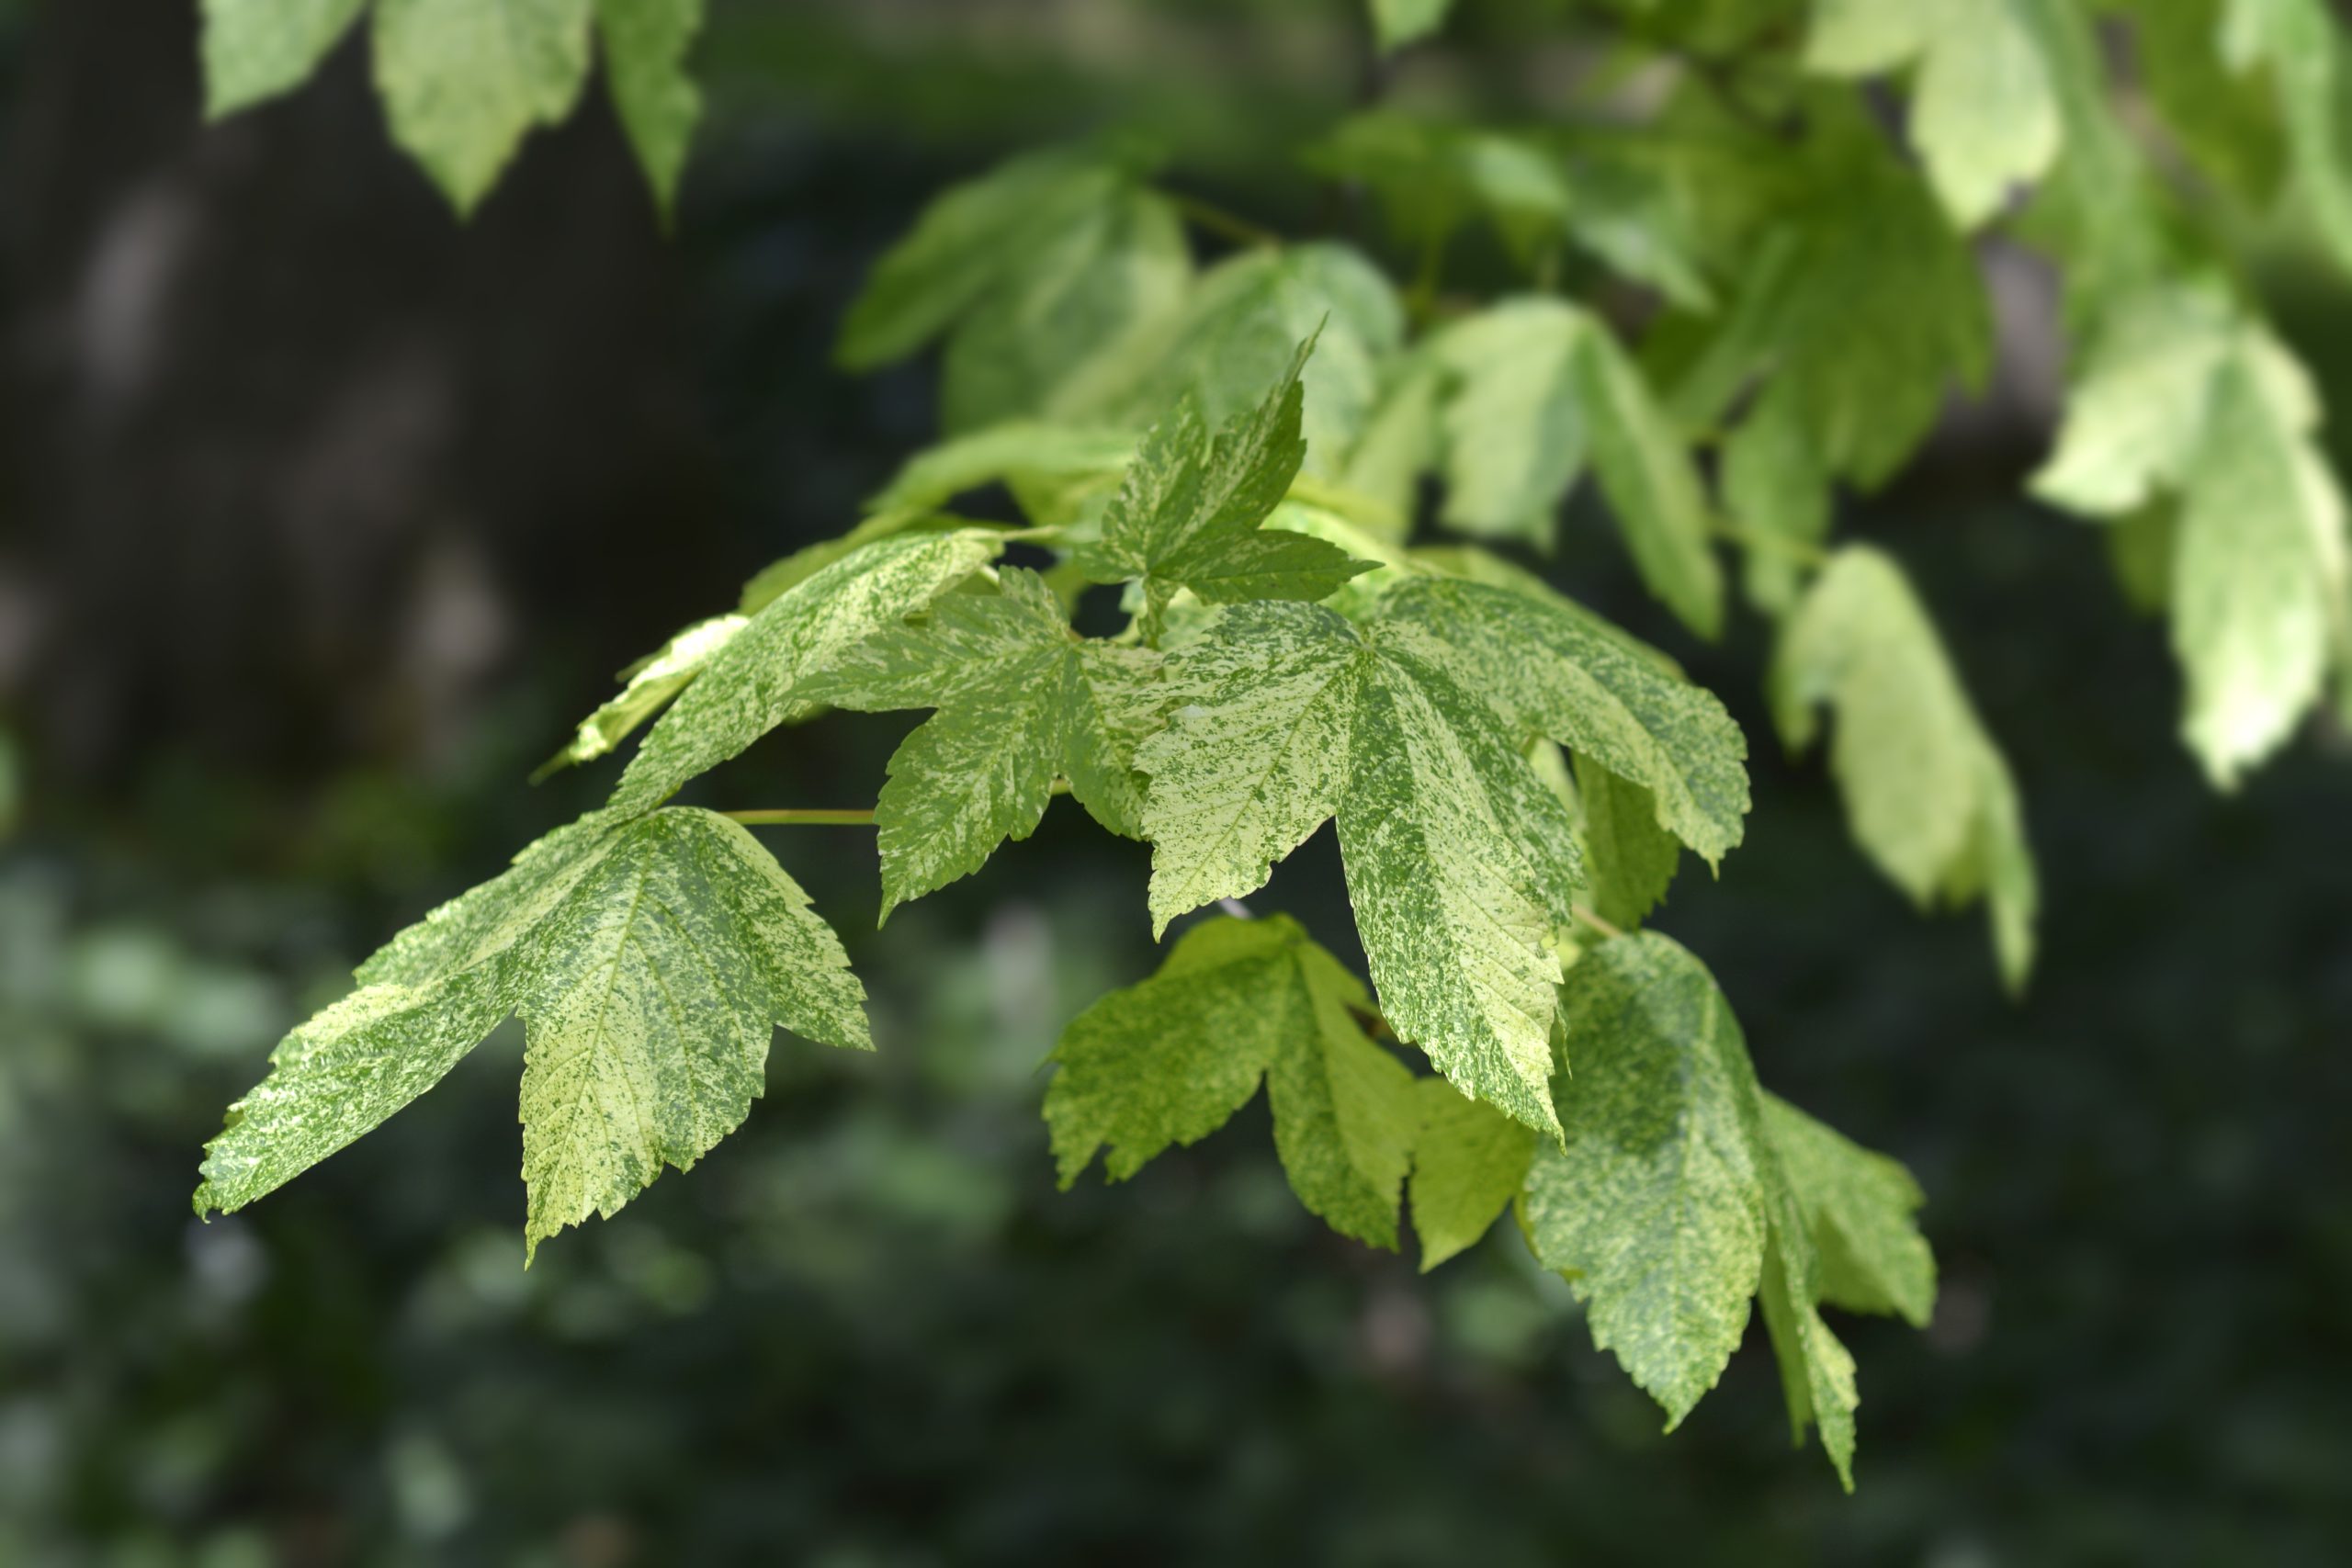 Acer pseudoplatanus "Leopoldii" - Klon jawor